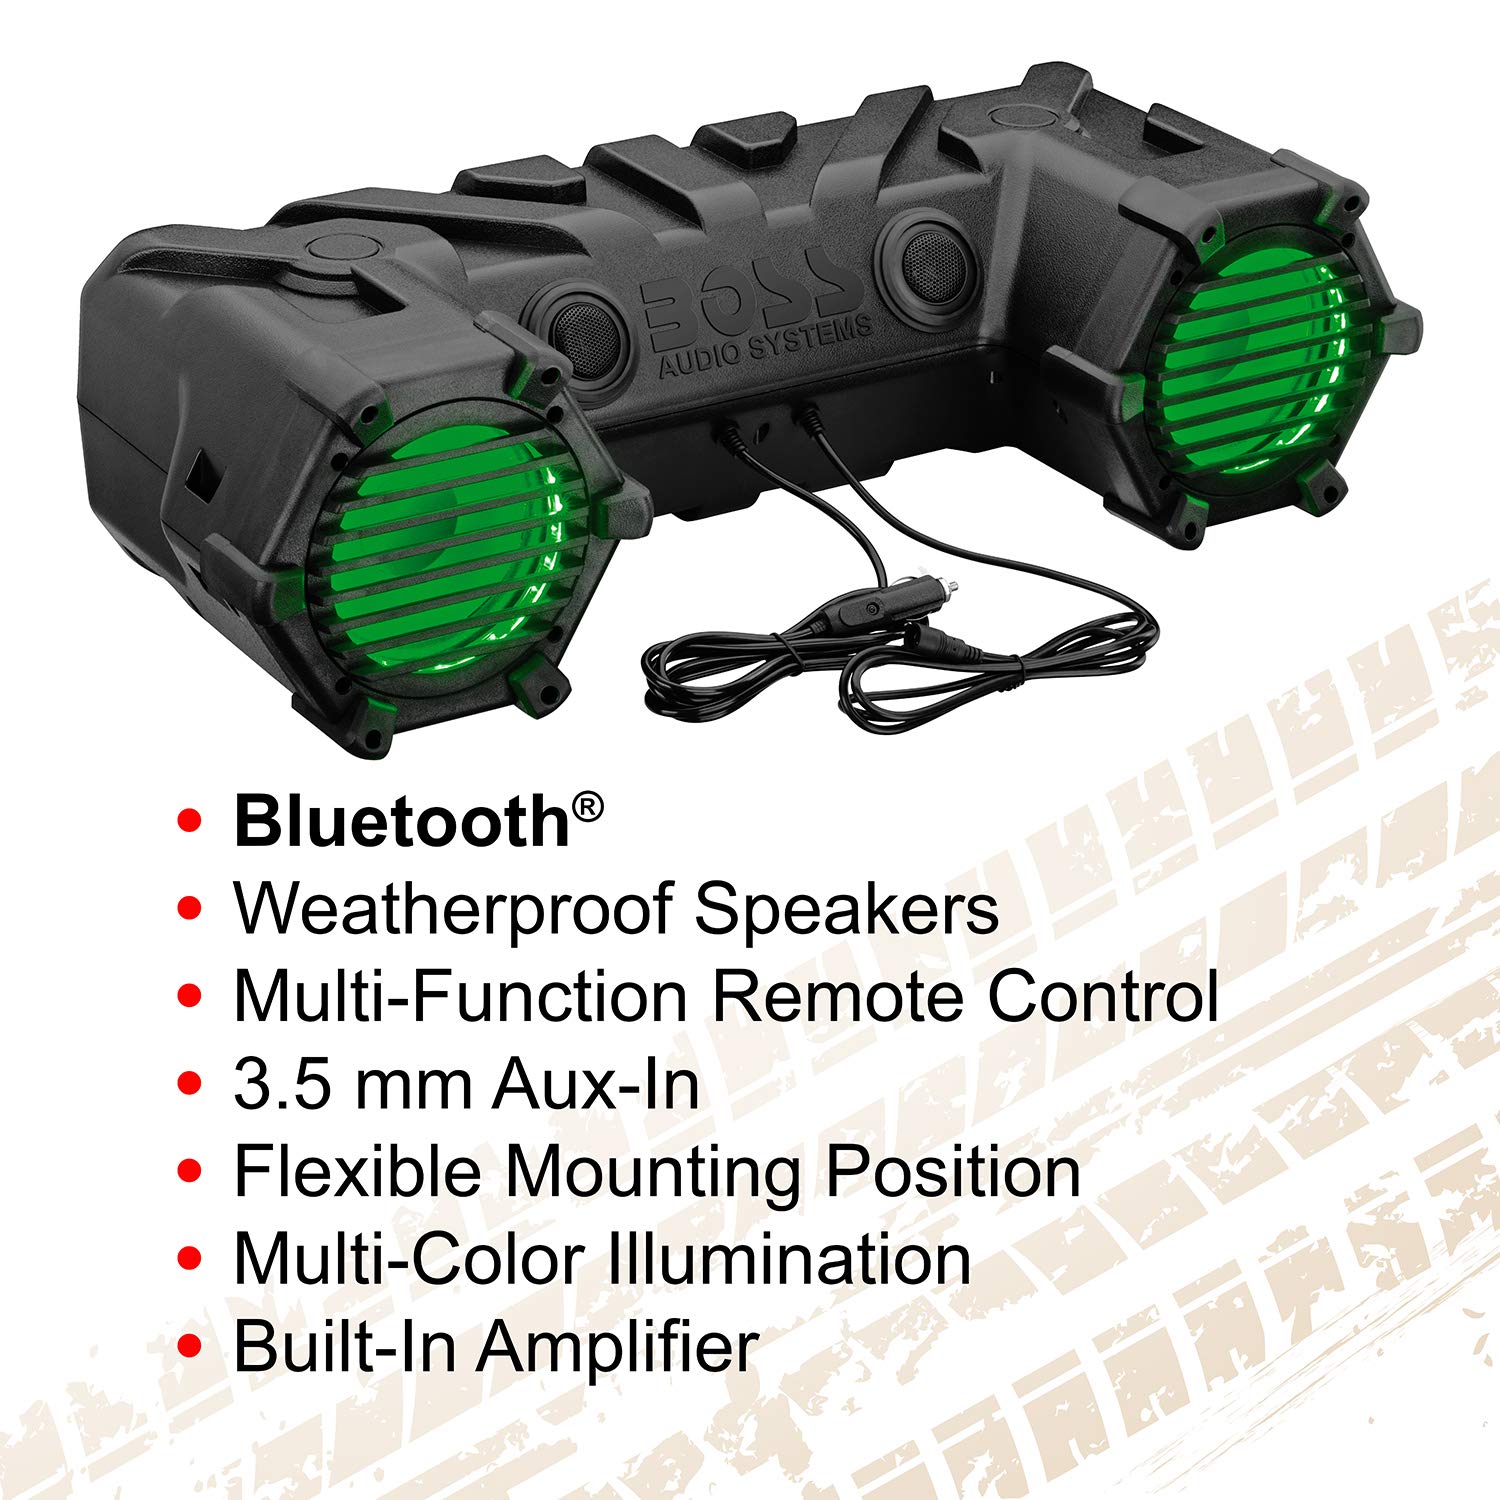 BOSS Audio Systems ATV30BRGB ATV UTV Weatherproof Sound System - 6.5 Inch Speakers, 1 Inch Tweeters, Built-in Amplifier, Bluetooth, Multi-Color Illumination, Easy Installation for 12 Volt Vehicles